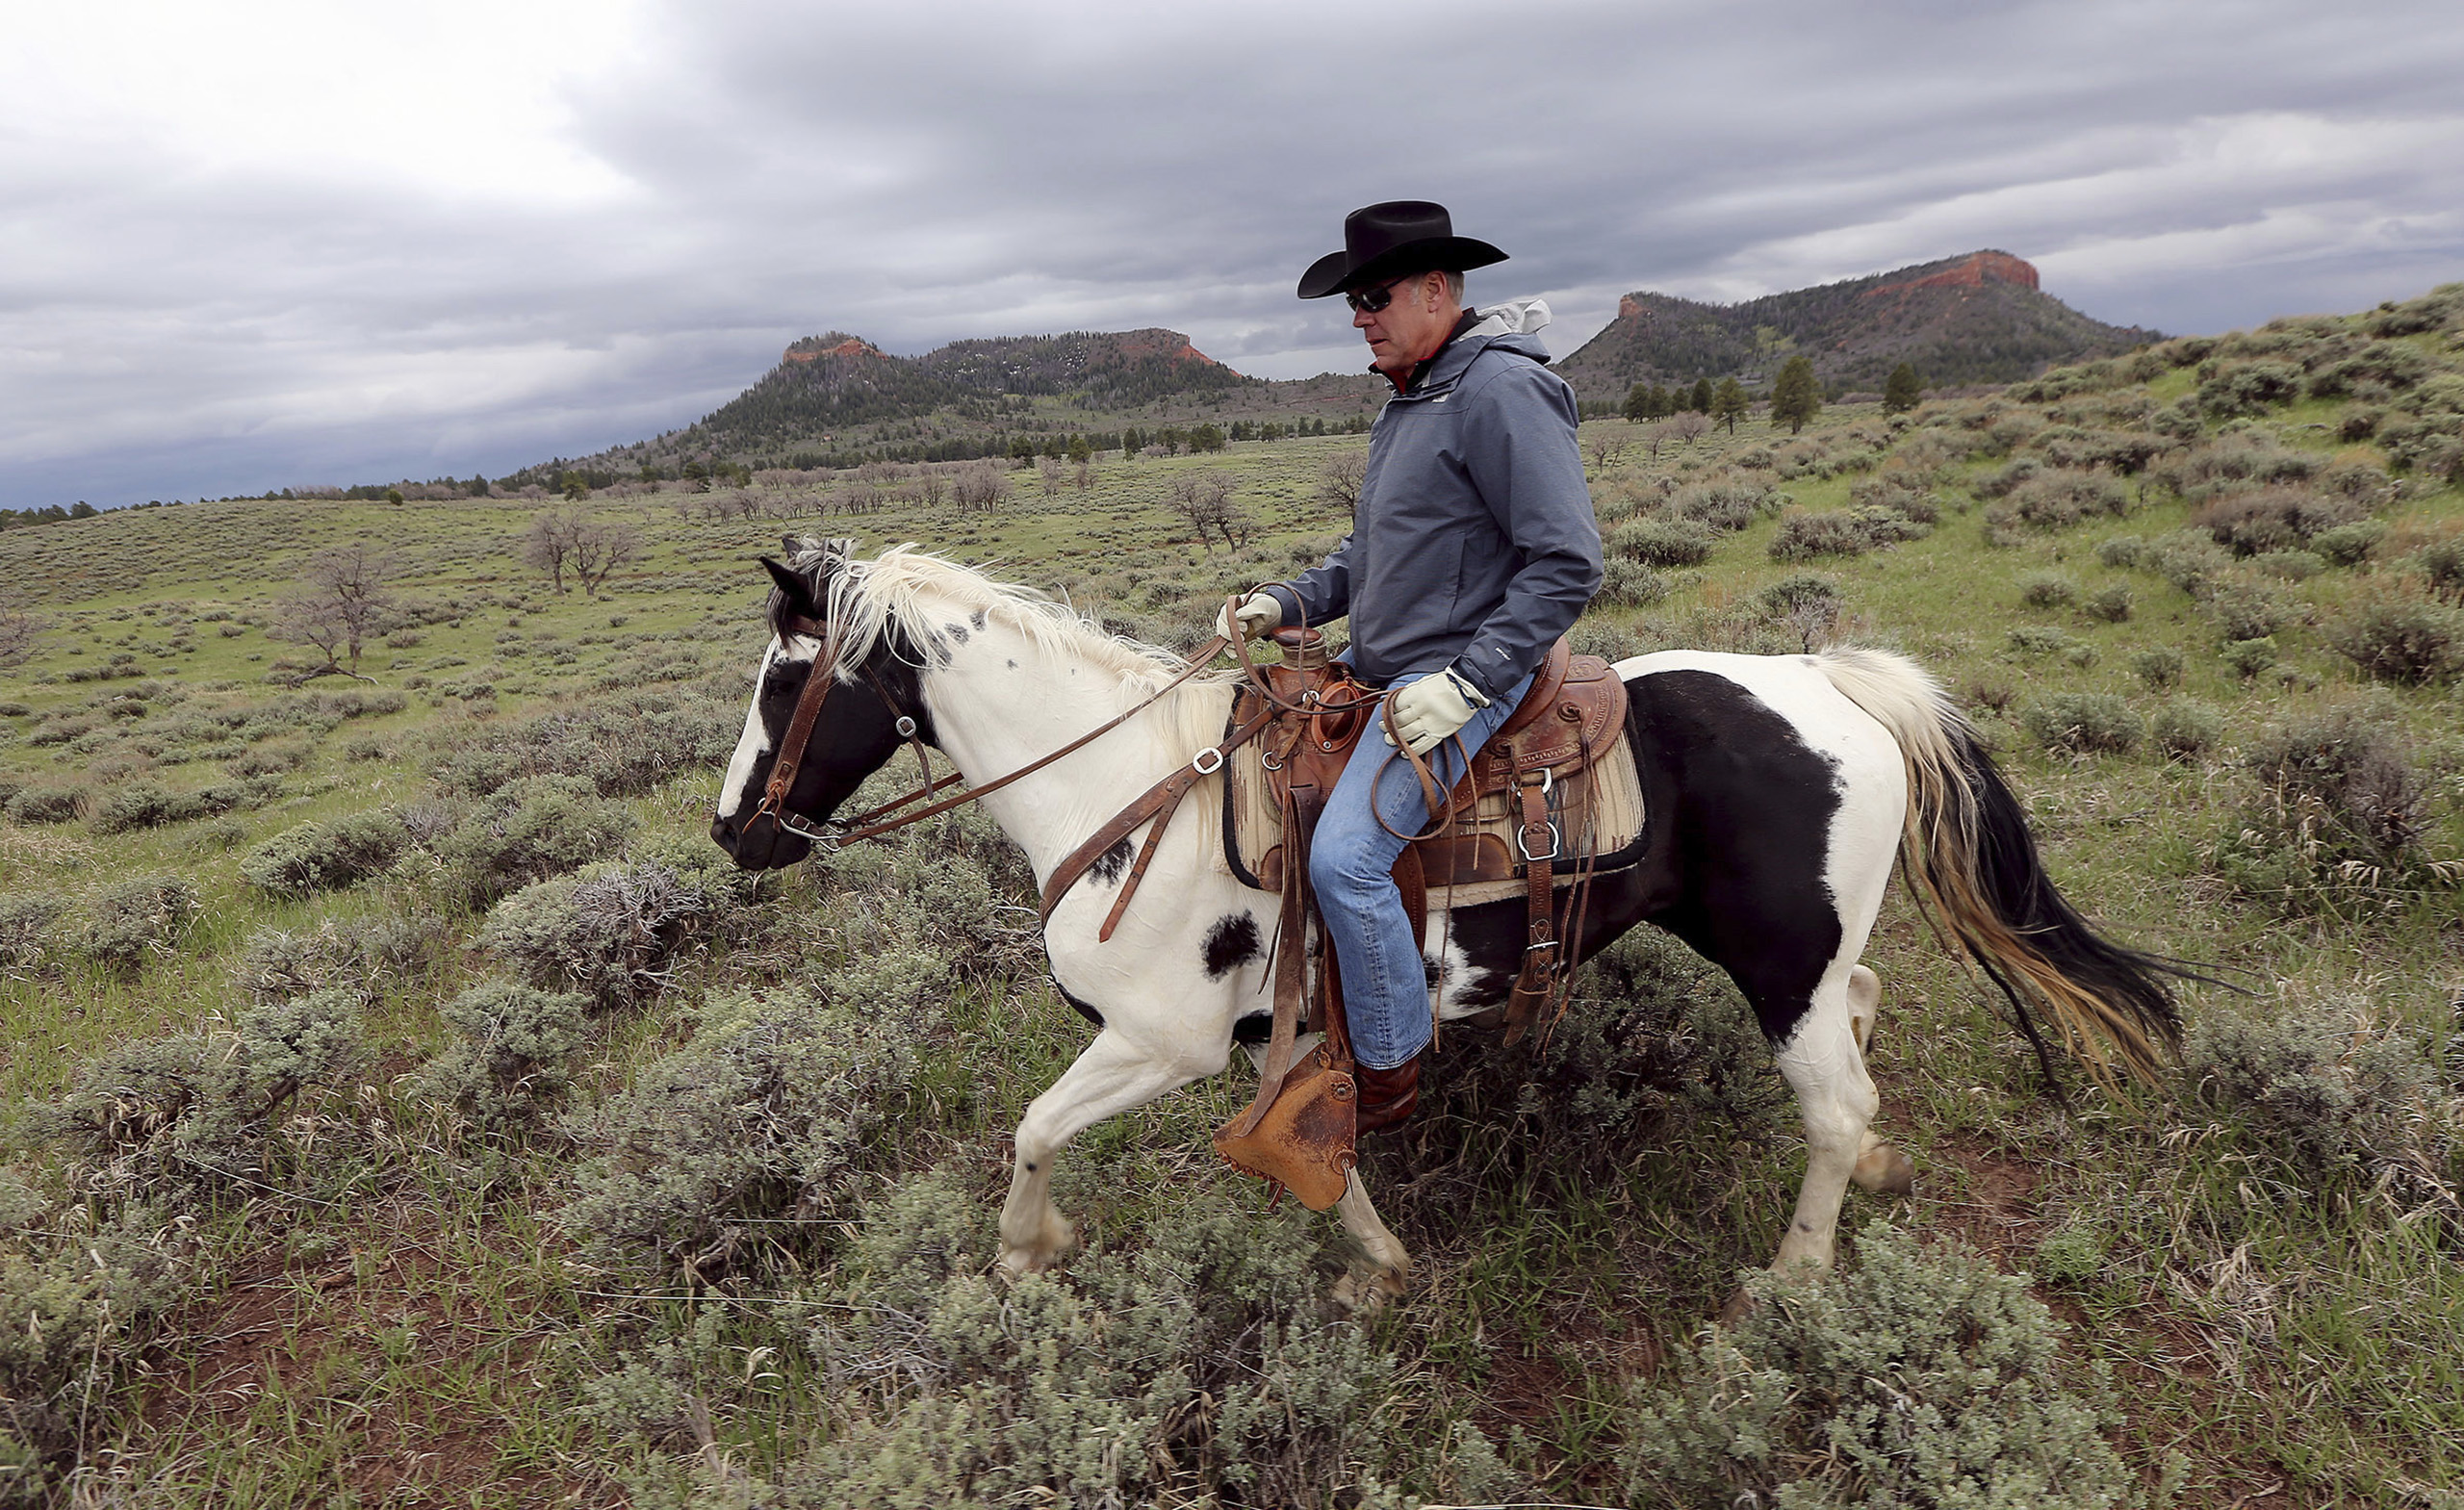 Interior Secretary Ryan Zinke rides a horse in the new Bears Ears National Monument near Blanding, Utah, on May 9, 2017. (Scott G Winterton—AP)